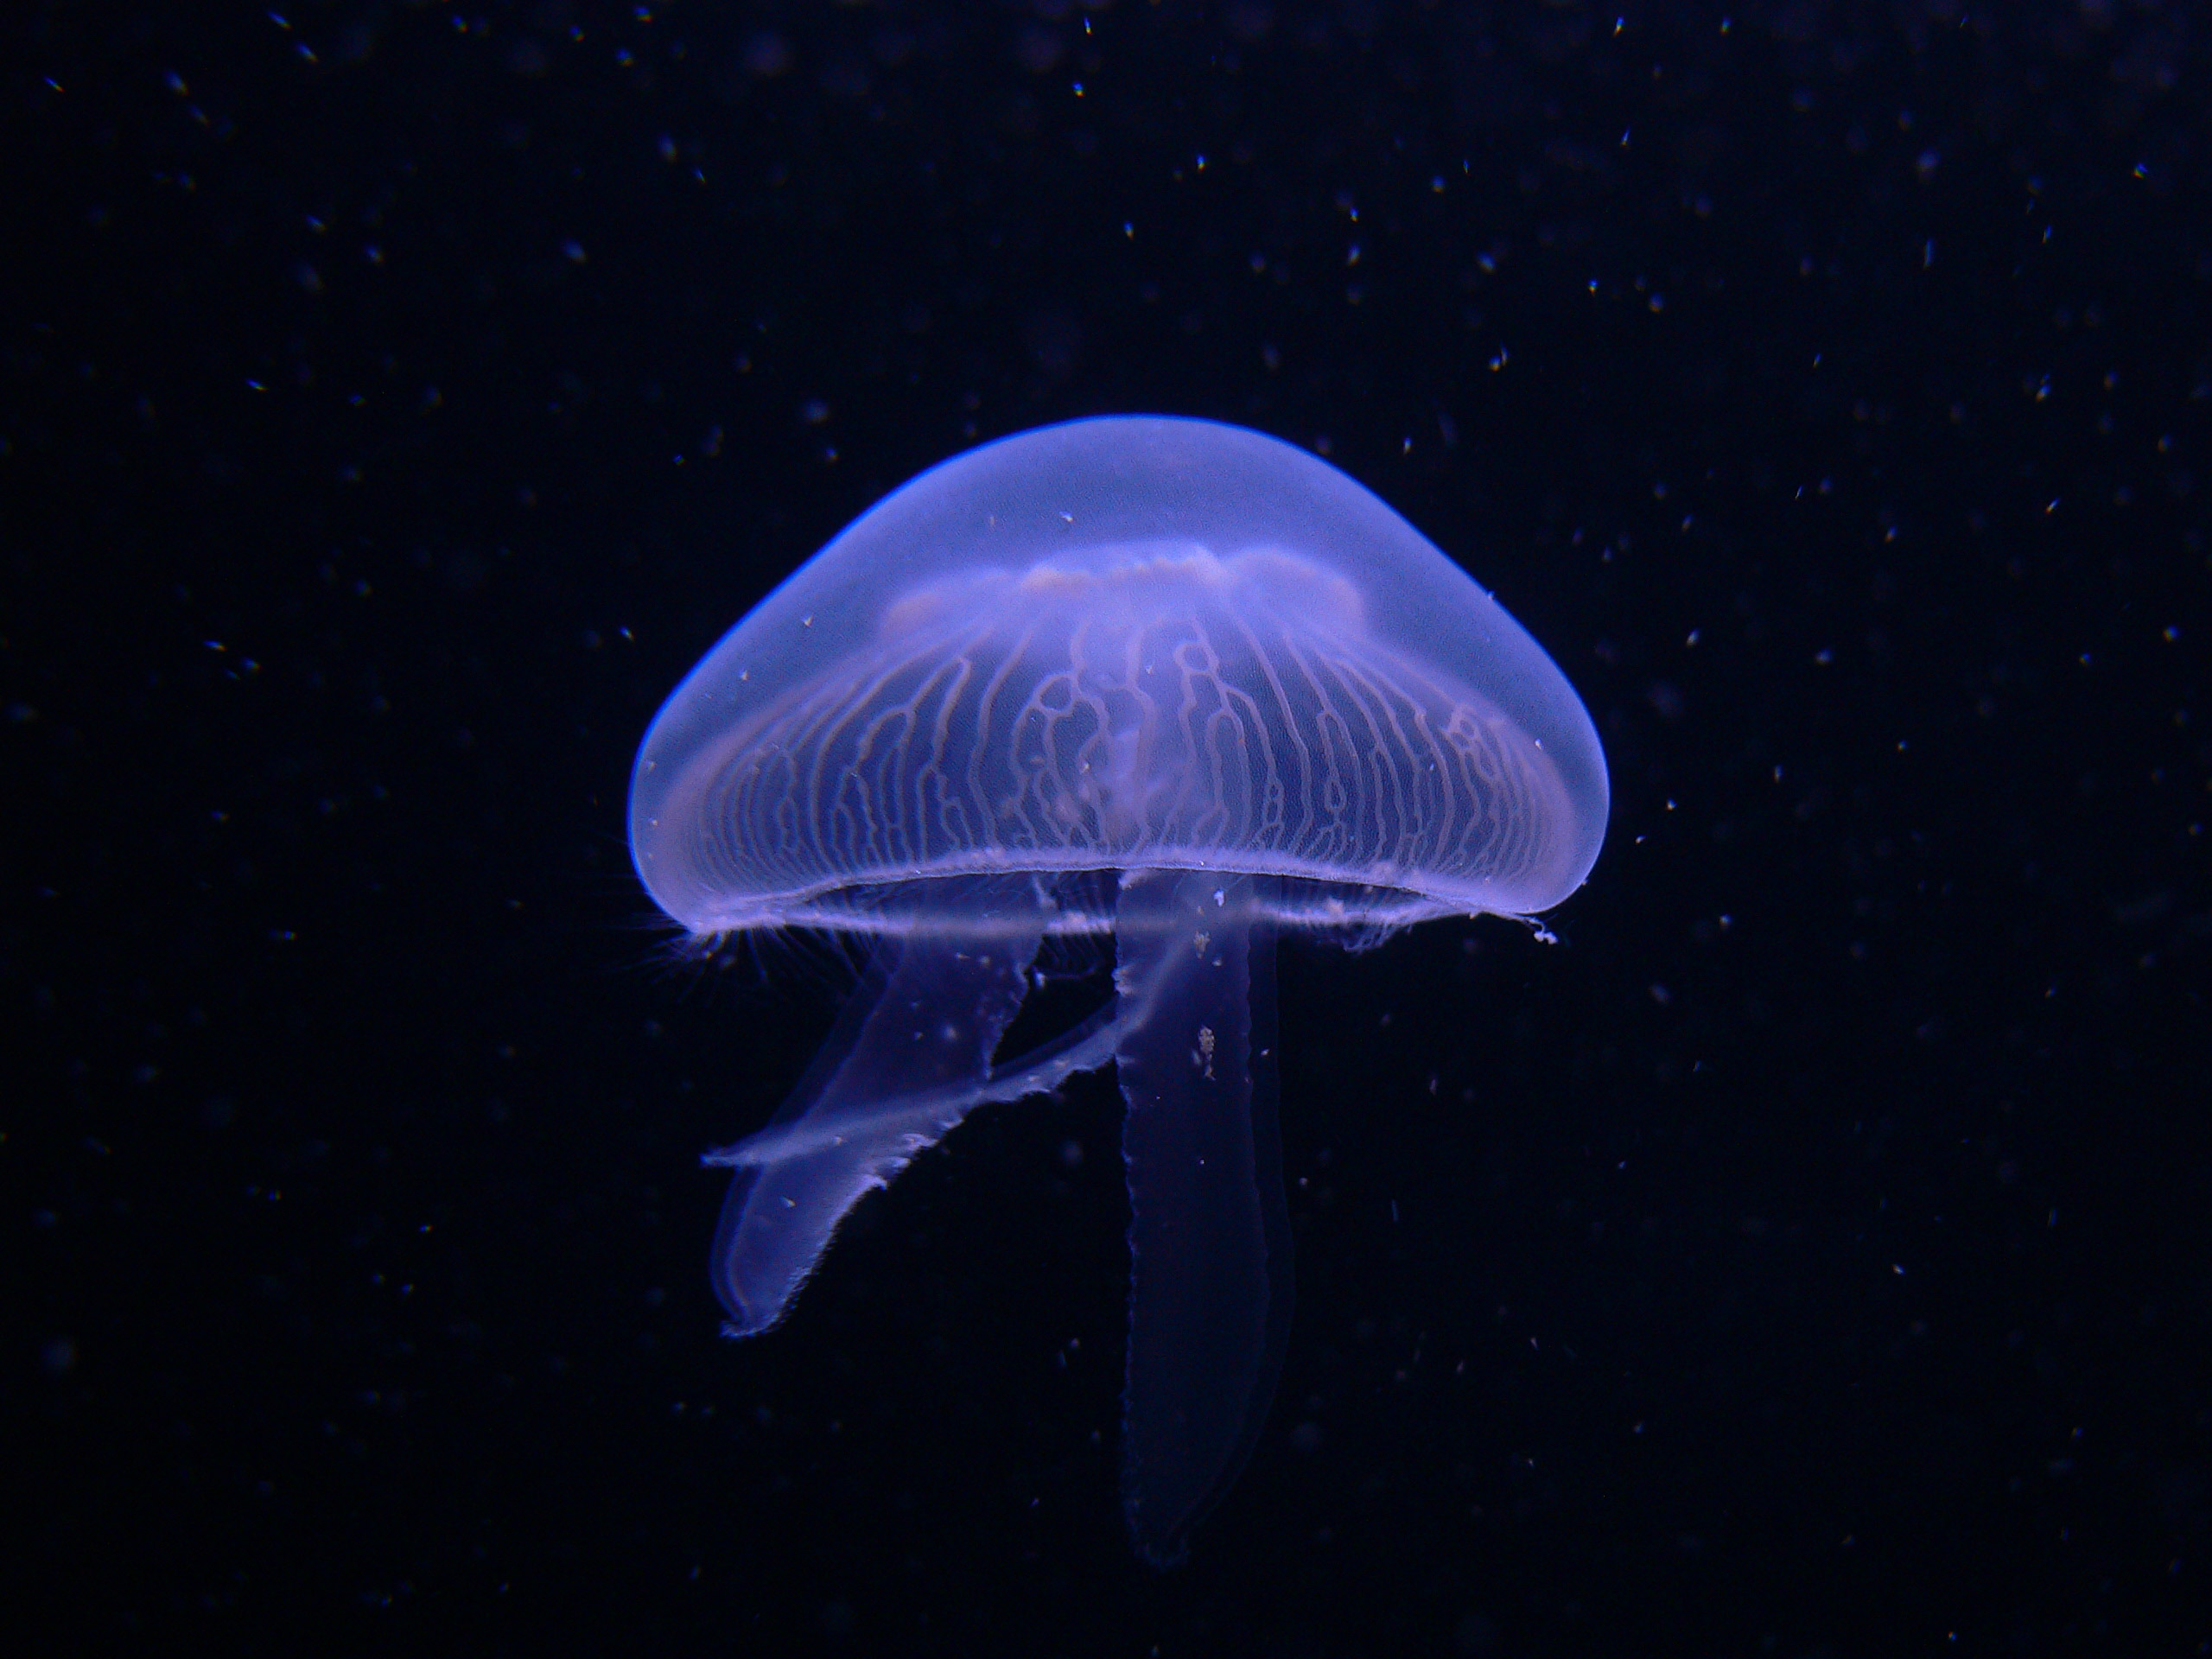 A jellyfish glowing in the dark